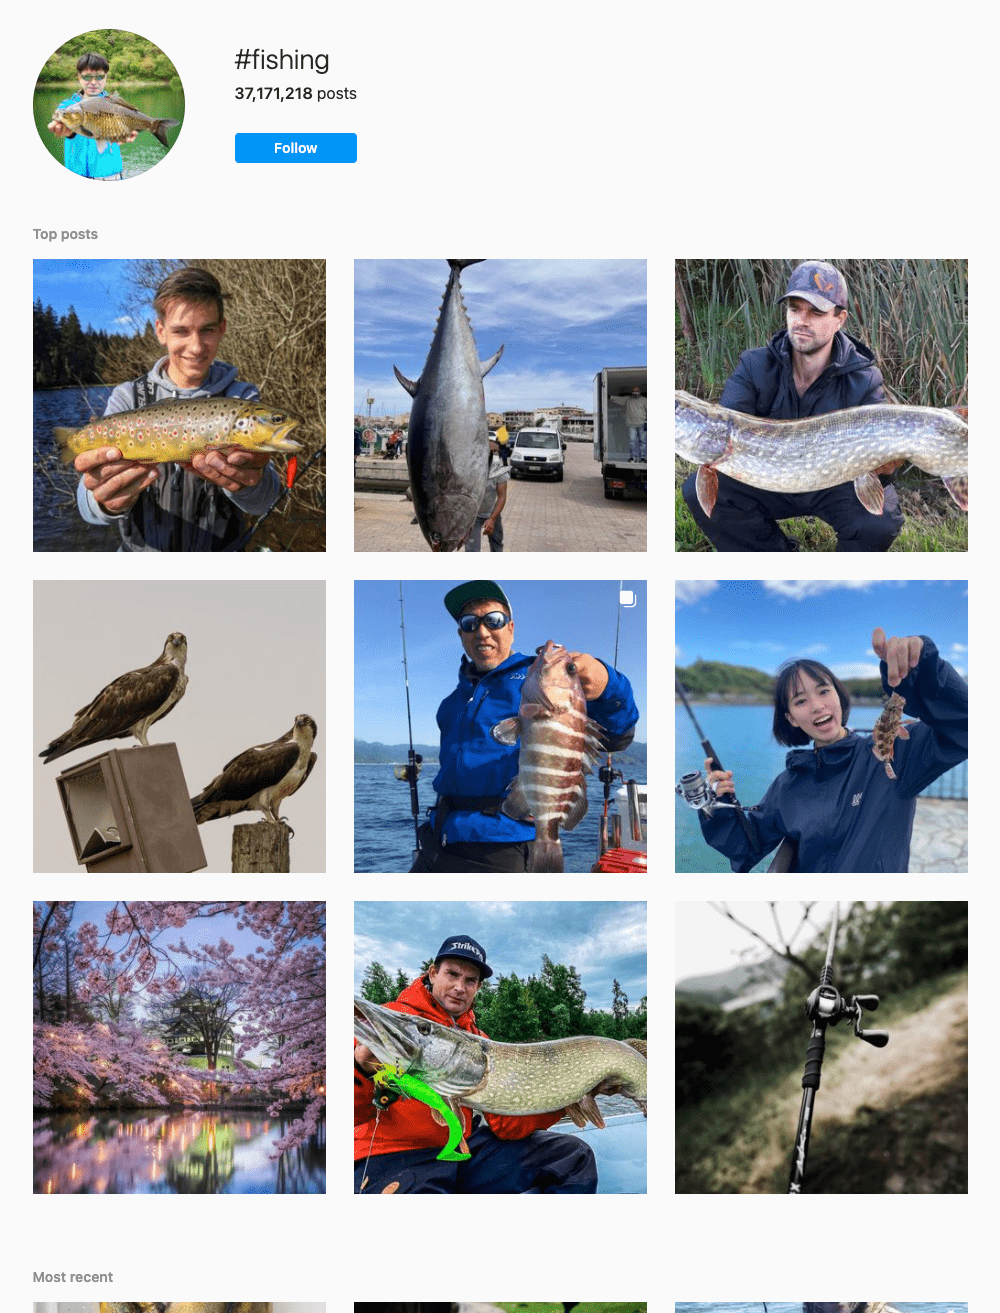 #fishing Hashtags for Instagram